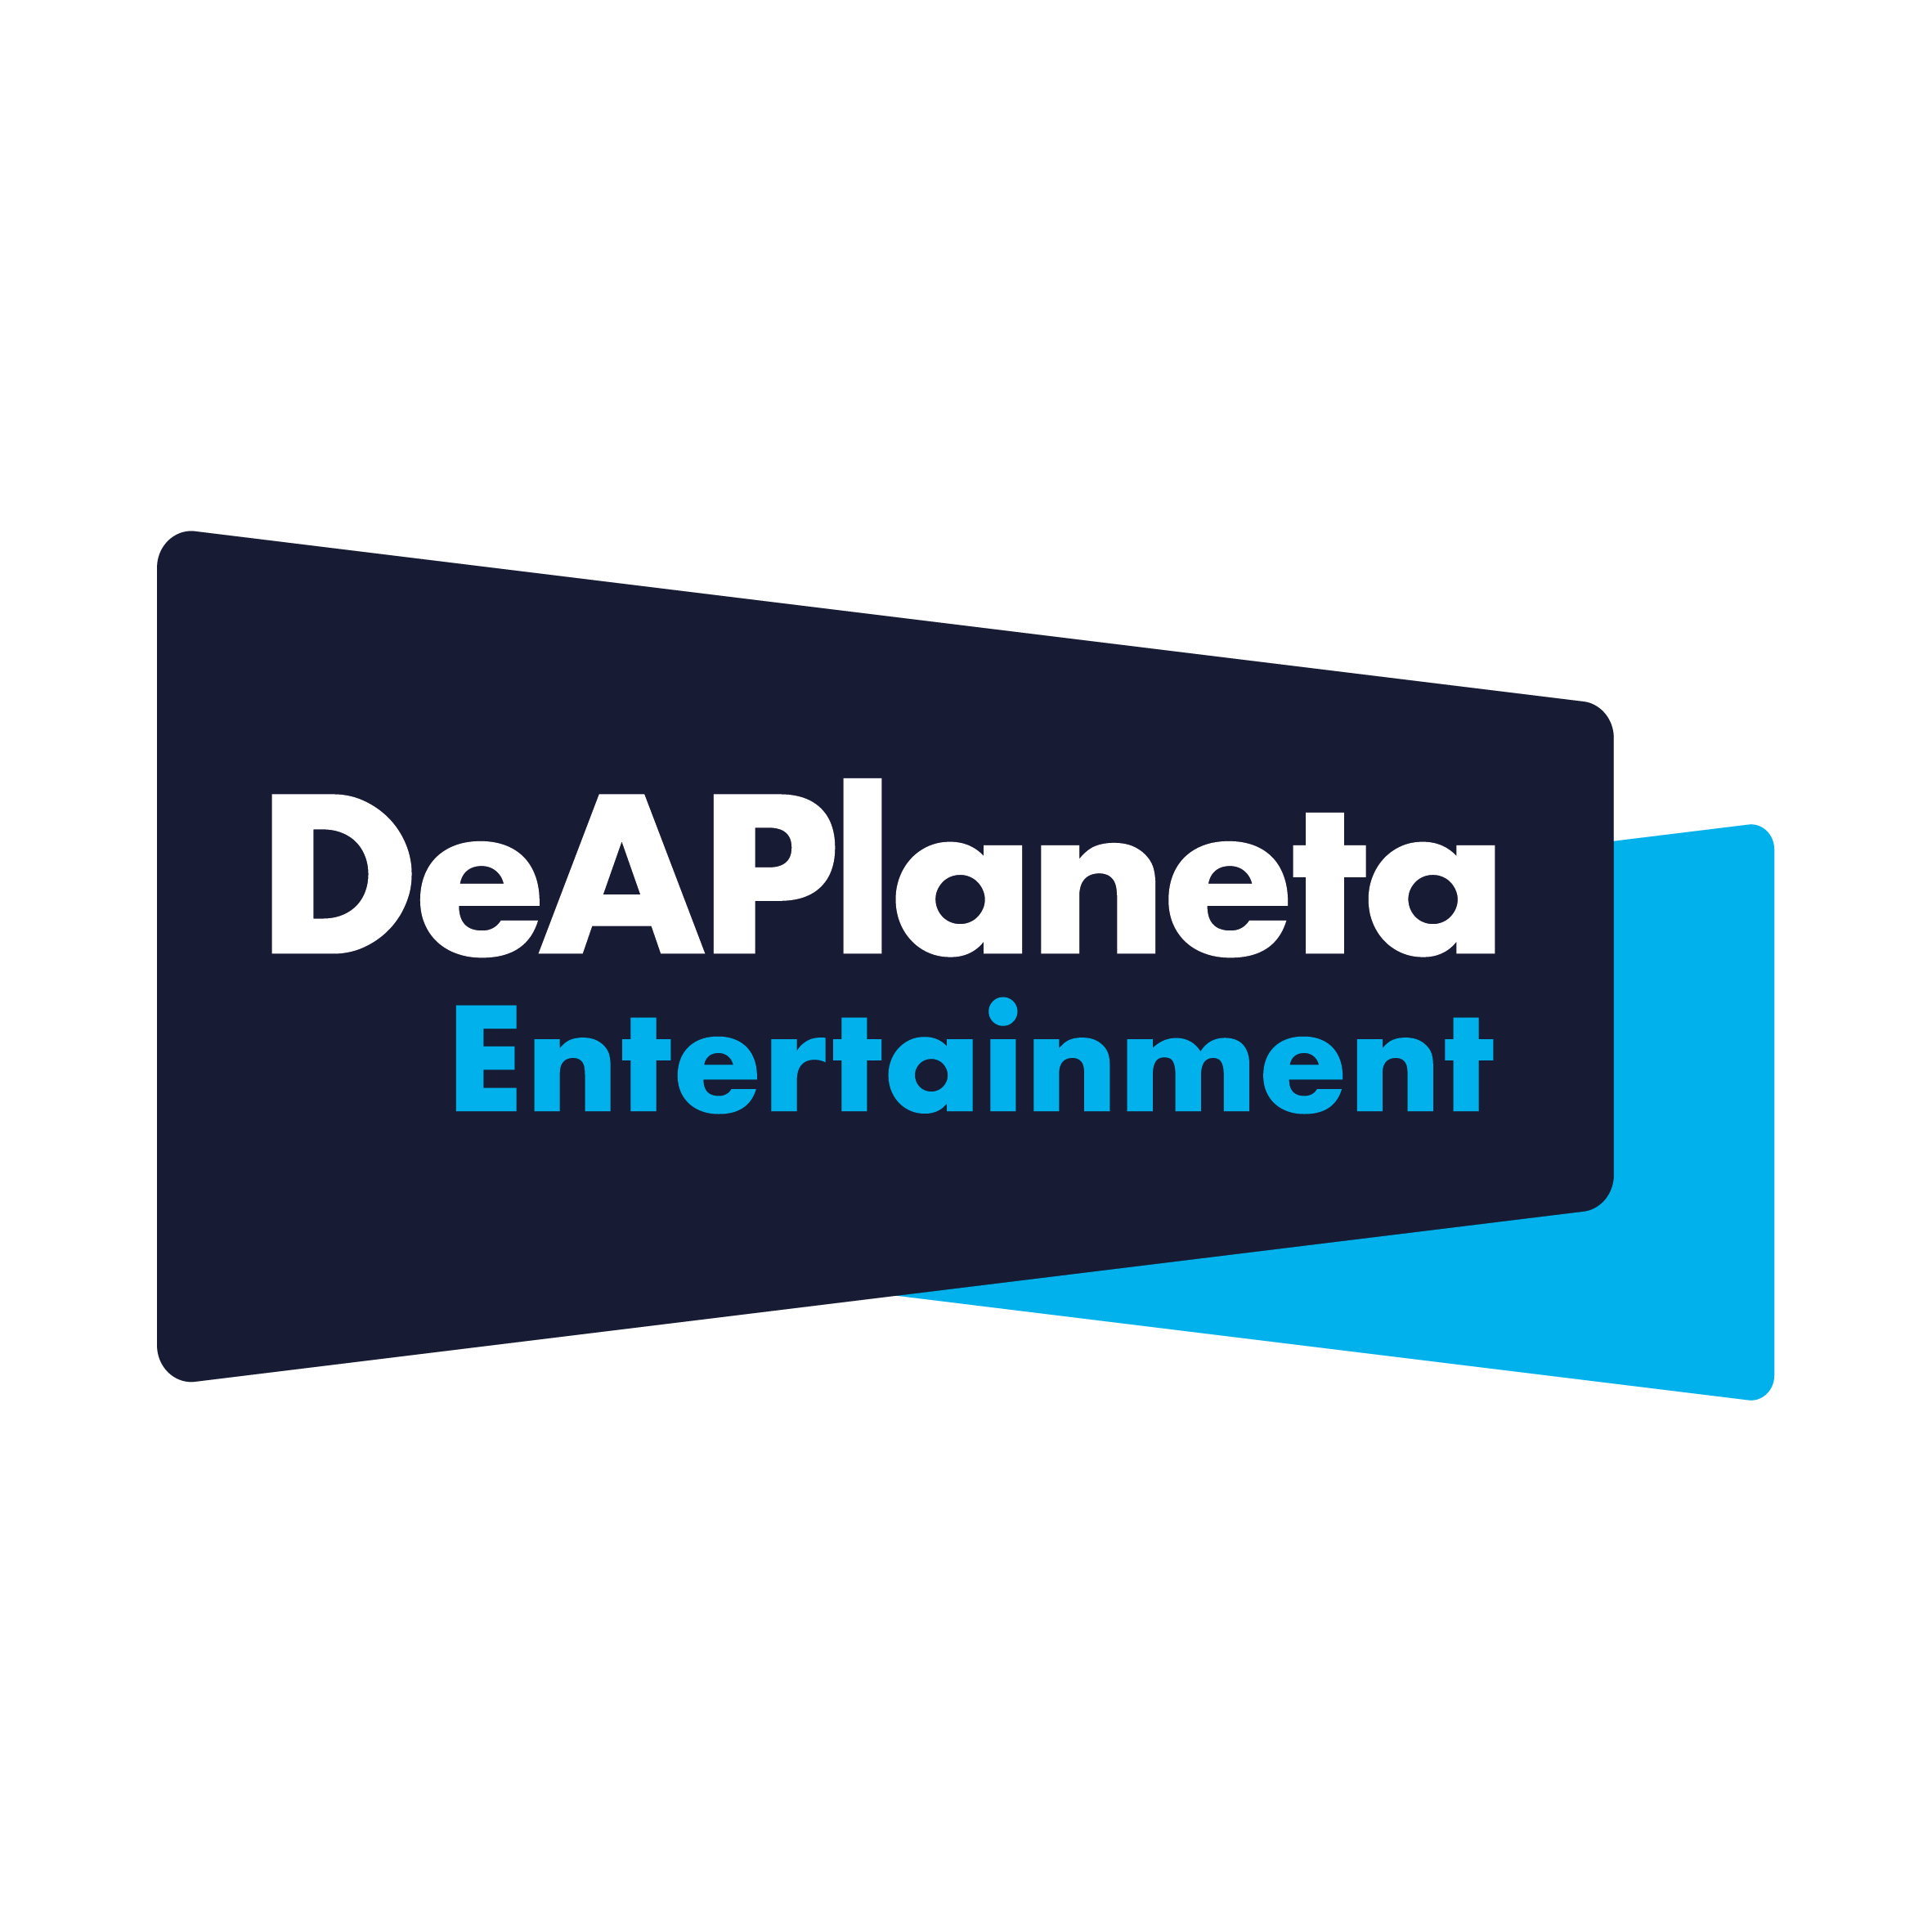 DeAPlanetaEntertainment